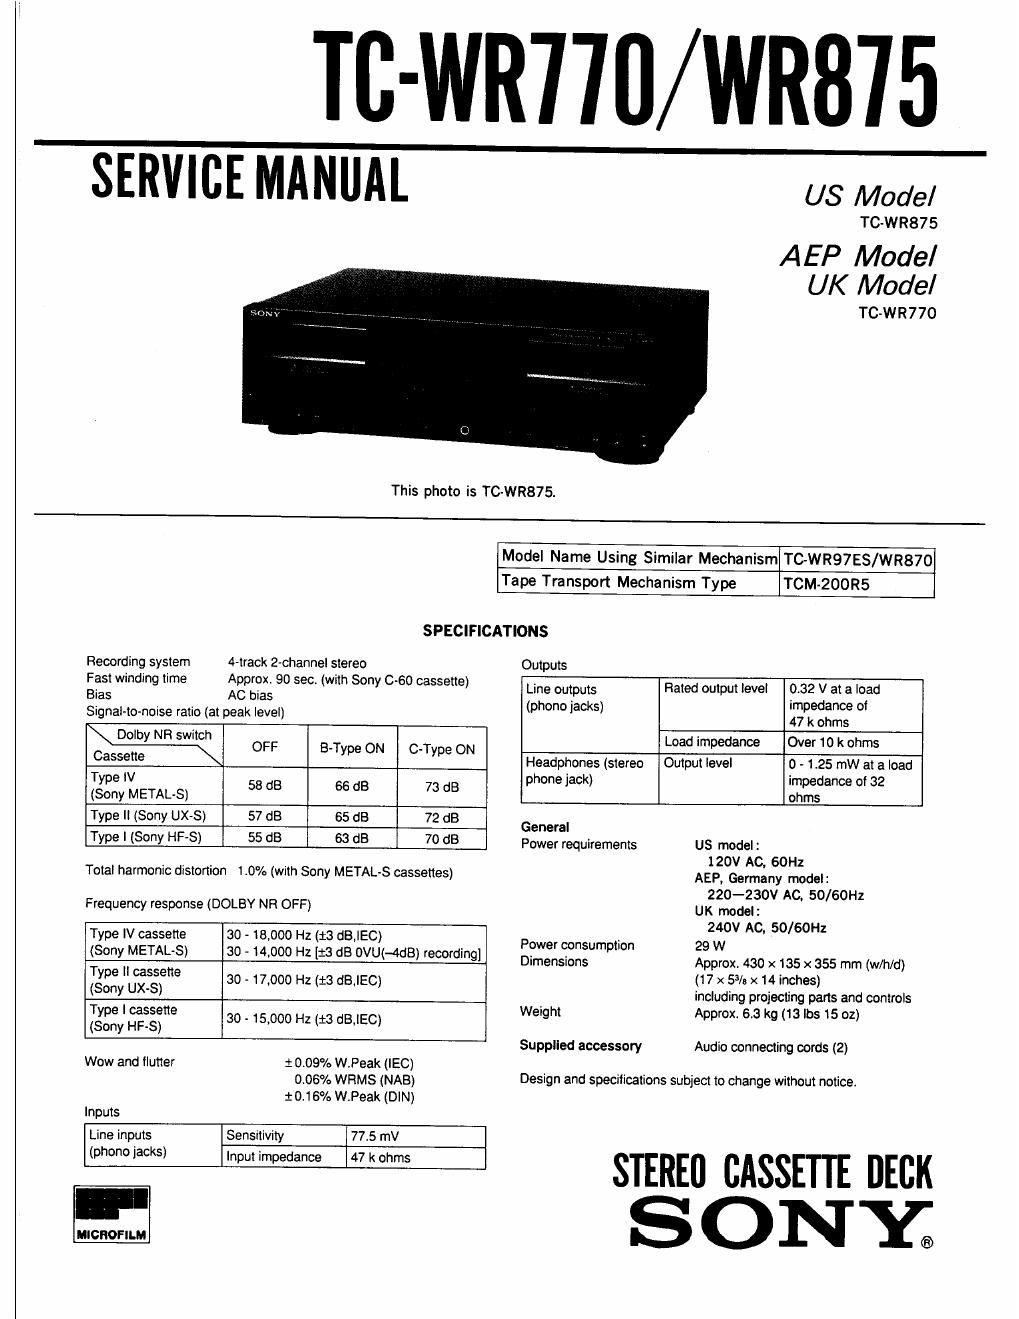 sony tc wr 770 service manual